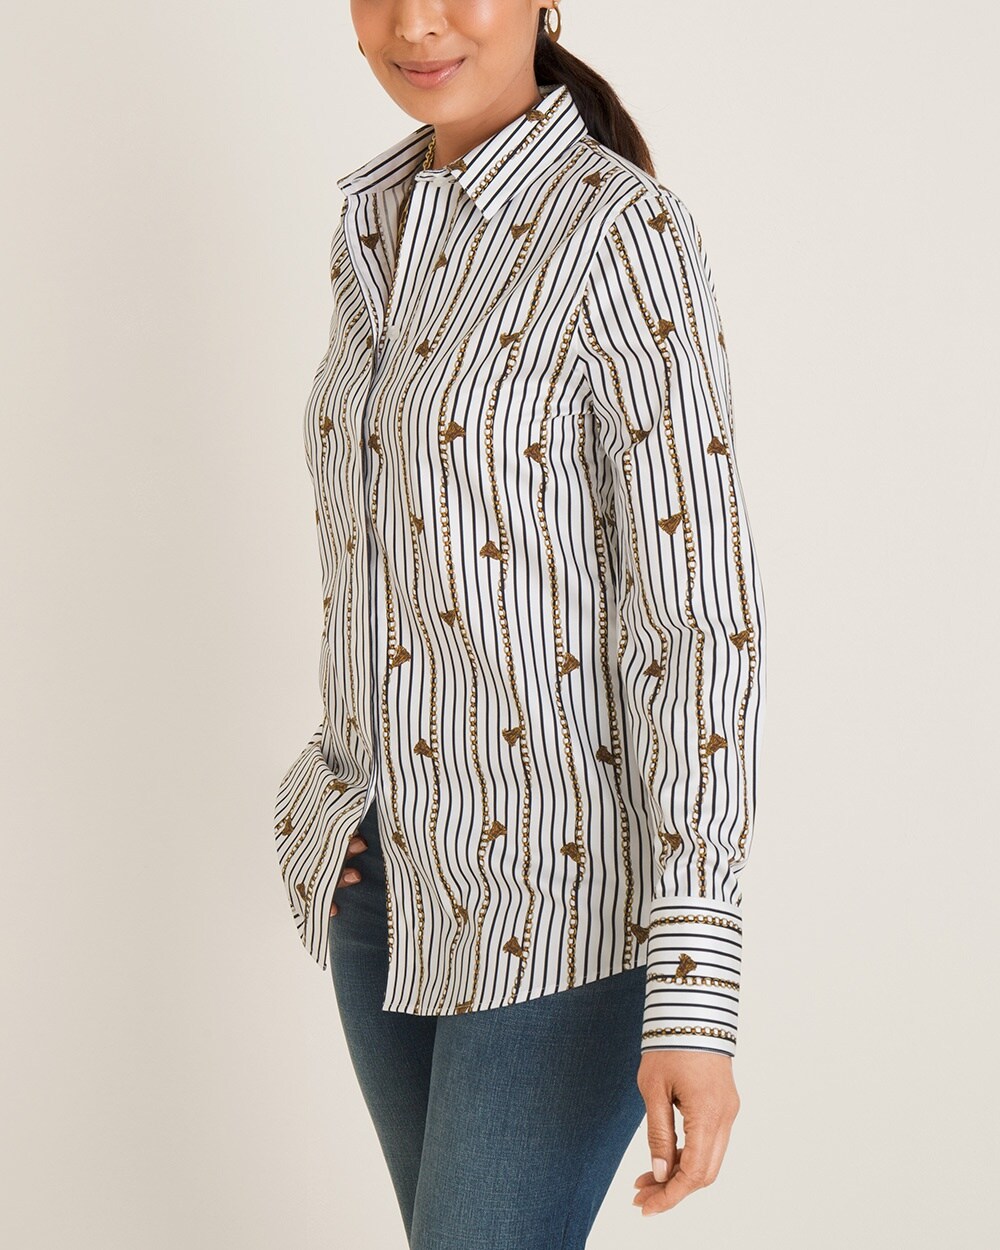 No-Iron Sateen Tassel-Striped Cotton Shirt